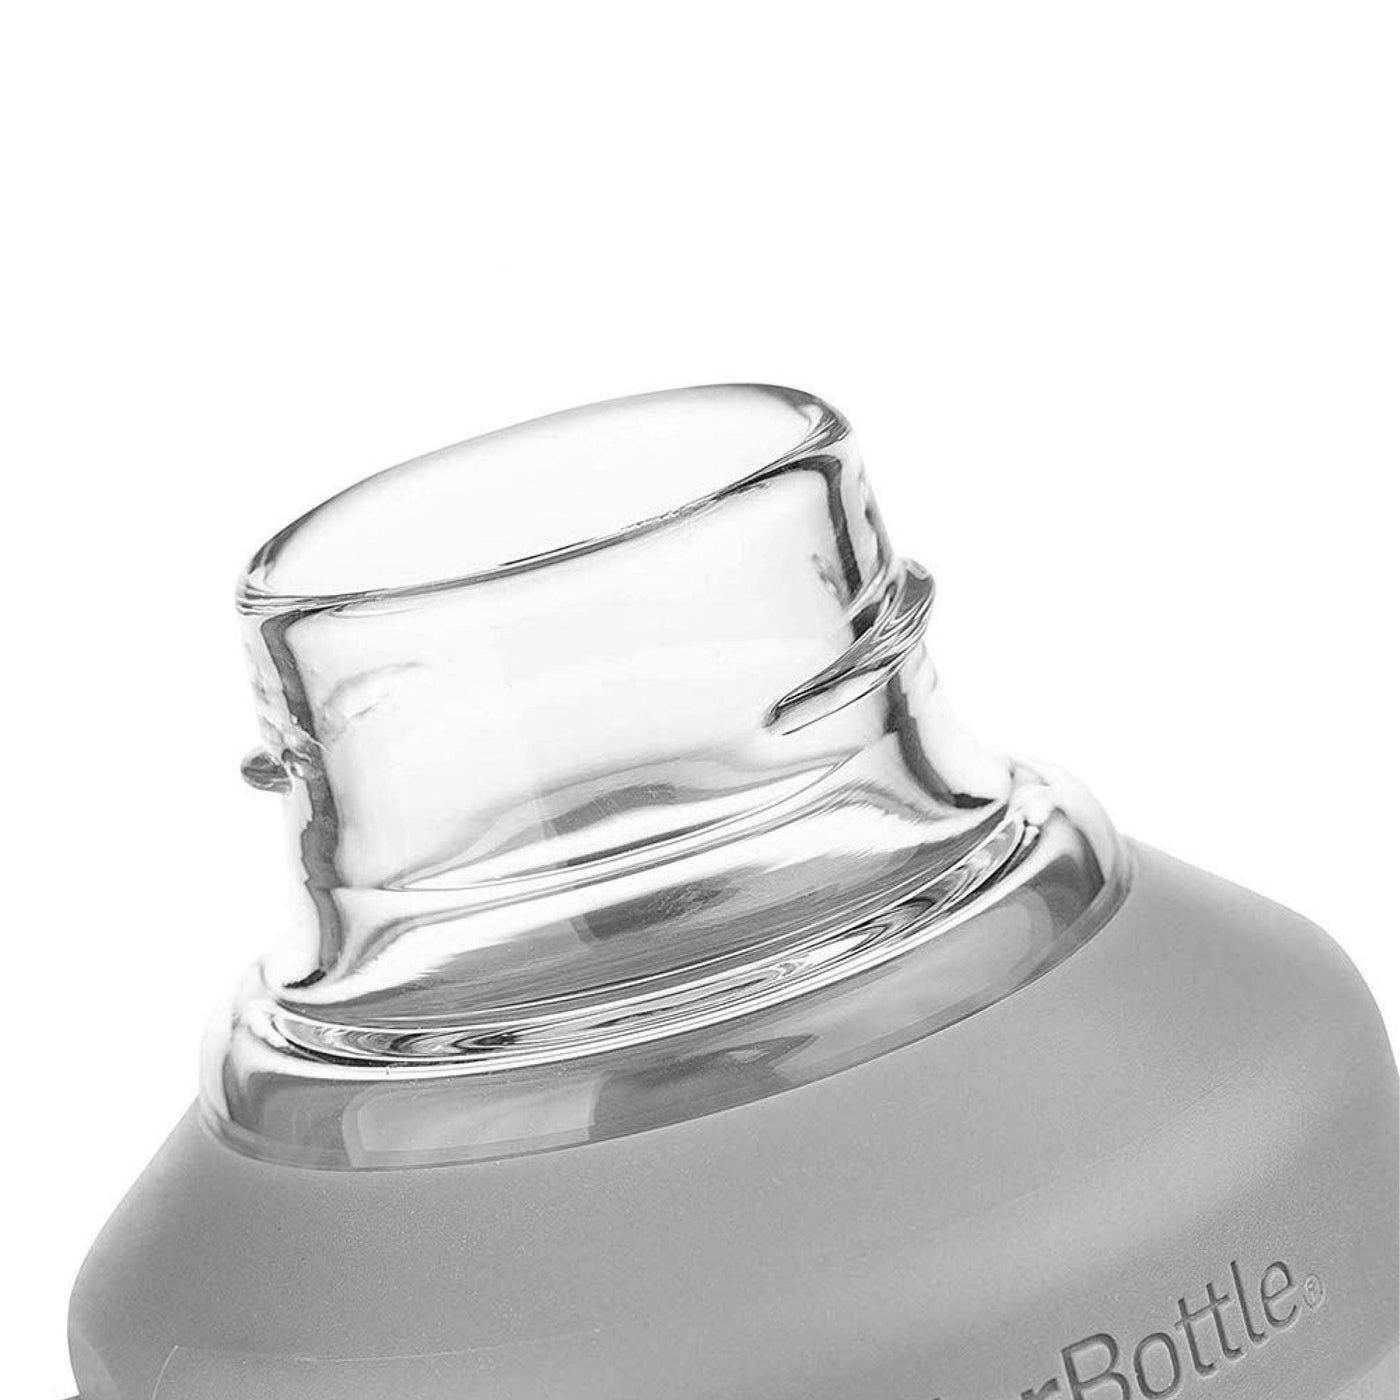 BlenderBottle Mantra Glass 20-Ounce, Assorted – BlenderBottle SEA